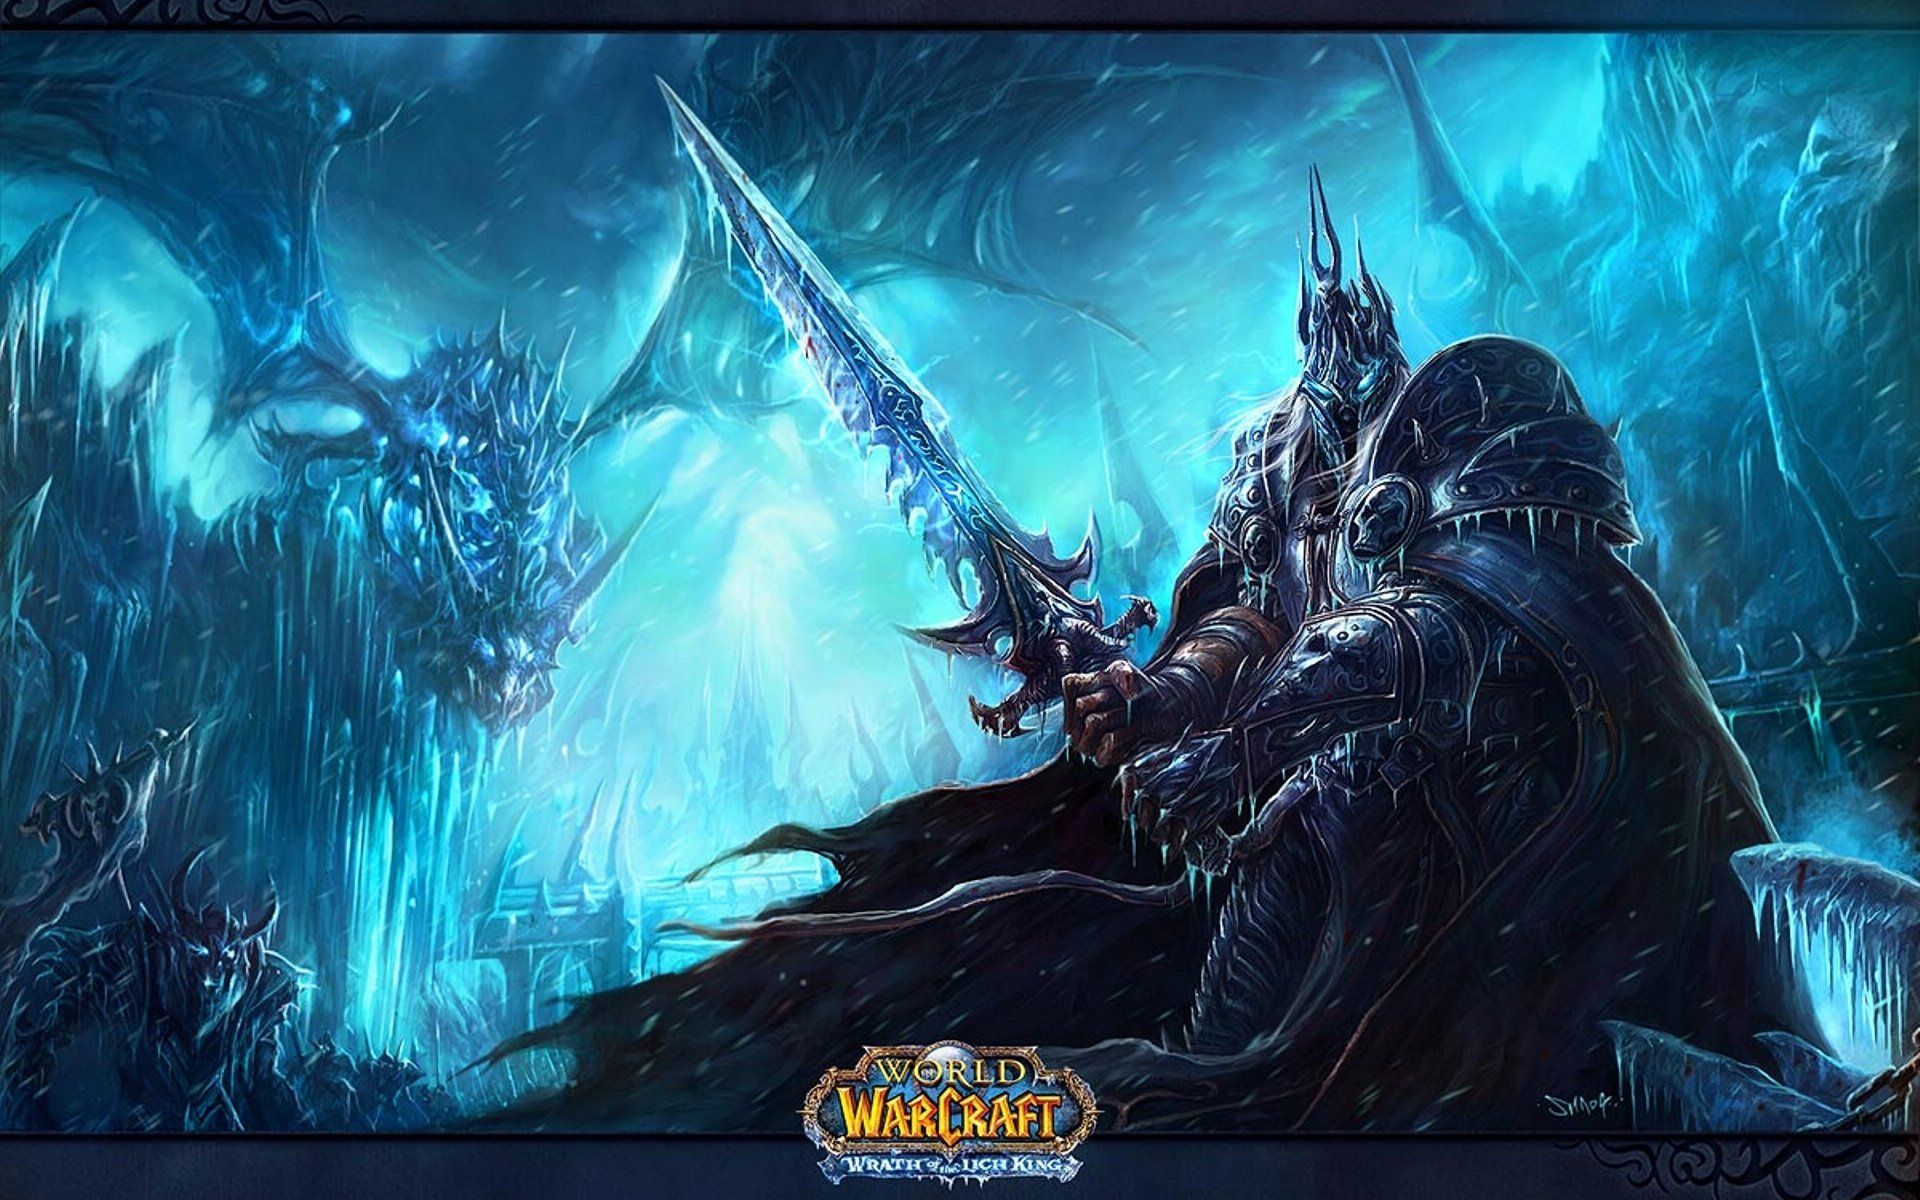 World of Warcraft desktop wallpapers - Best Multiplayer game